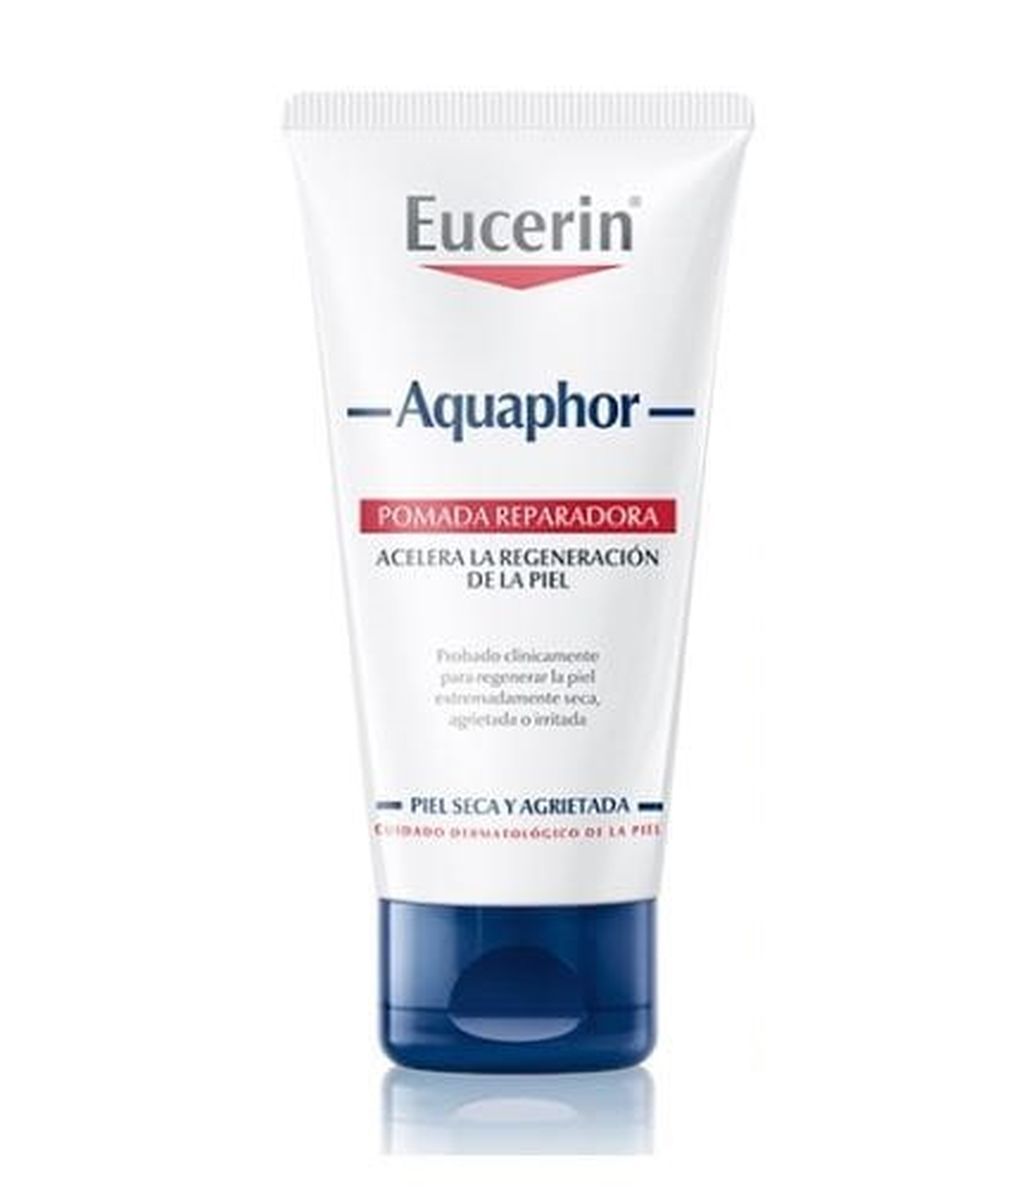 Aquaphor-Eucerin